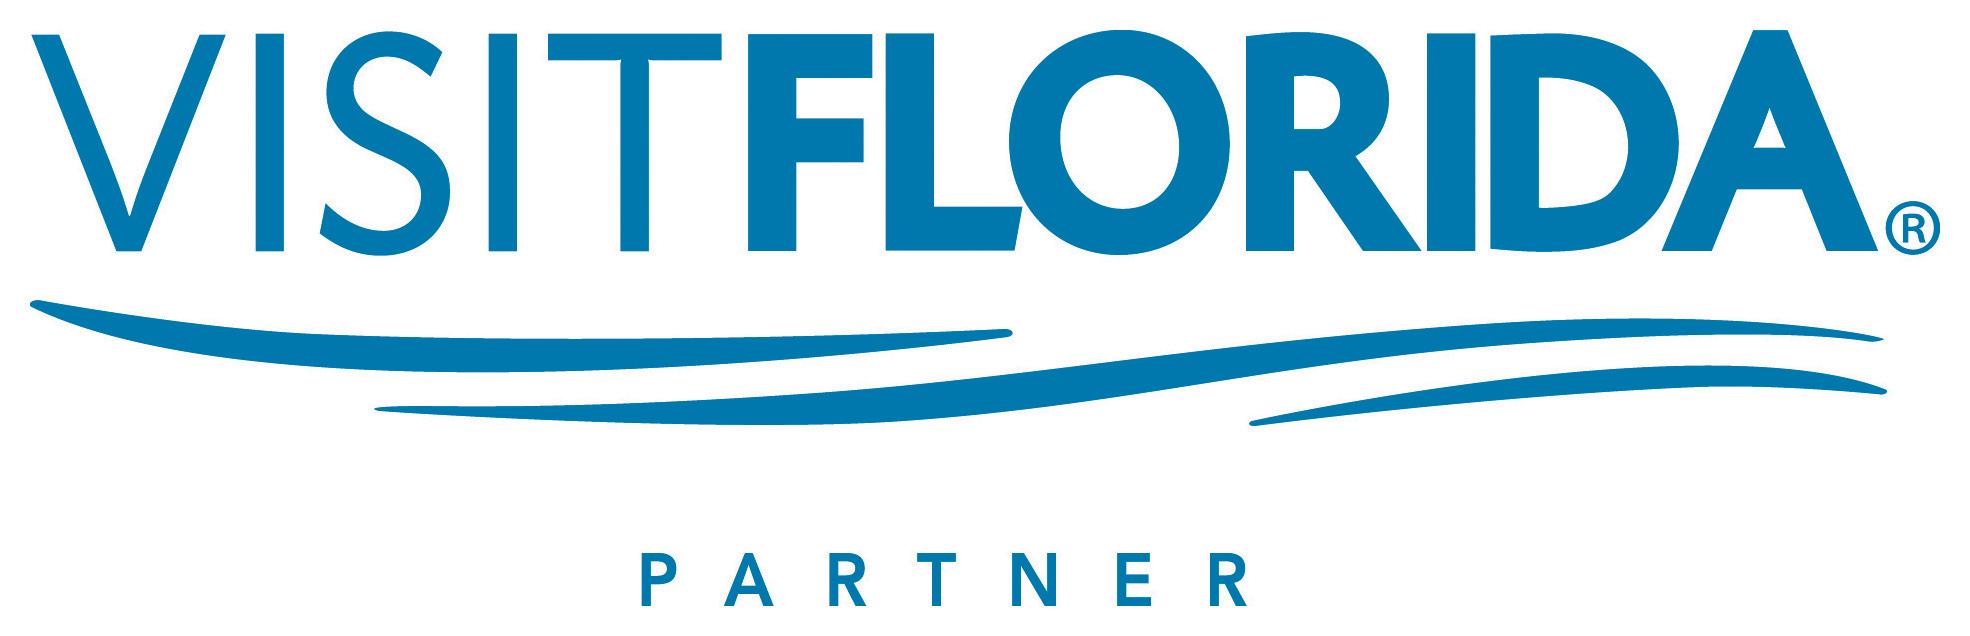 Visit-Florida-pref-logo-3-28-13